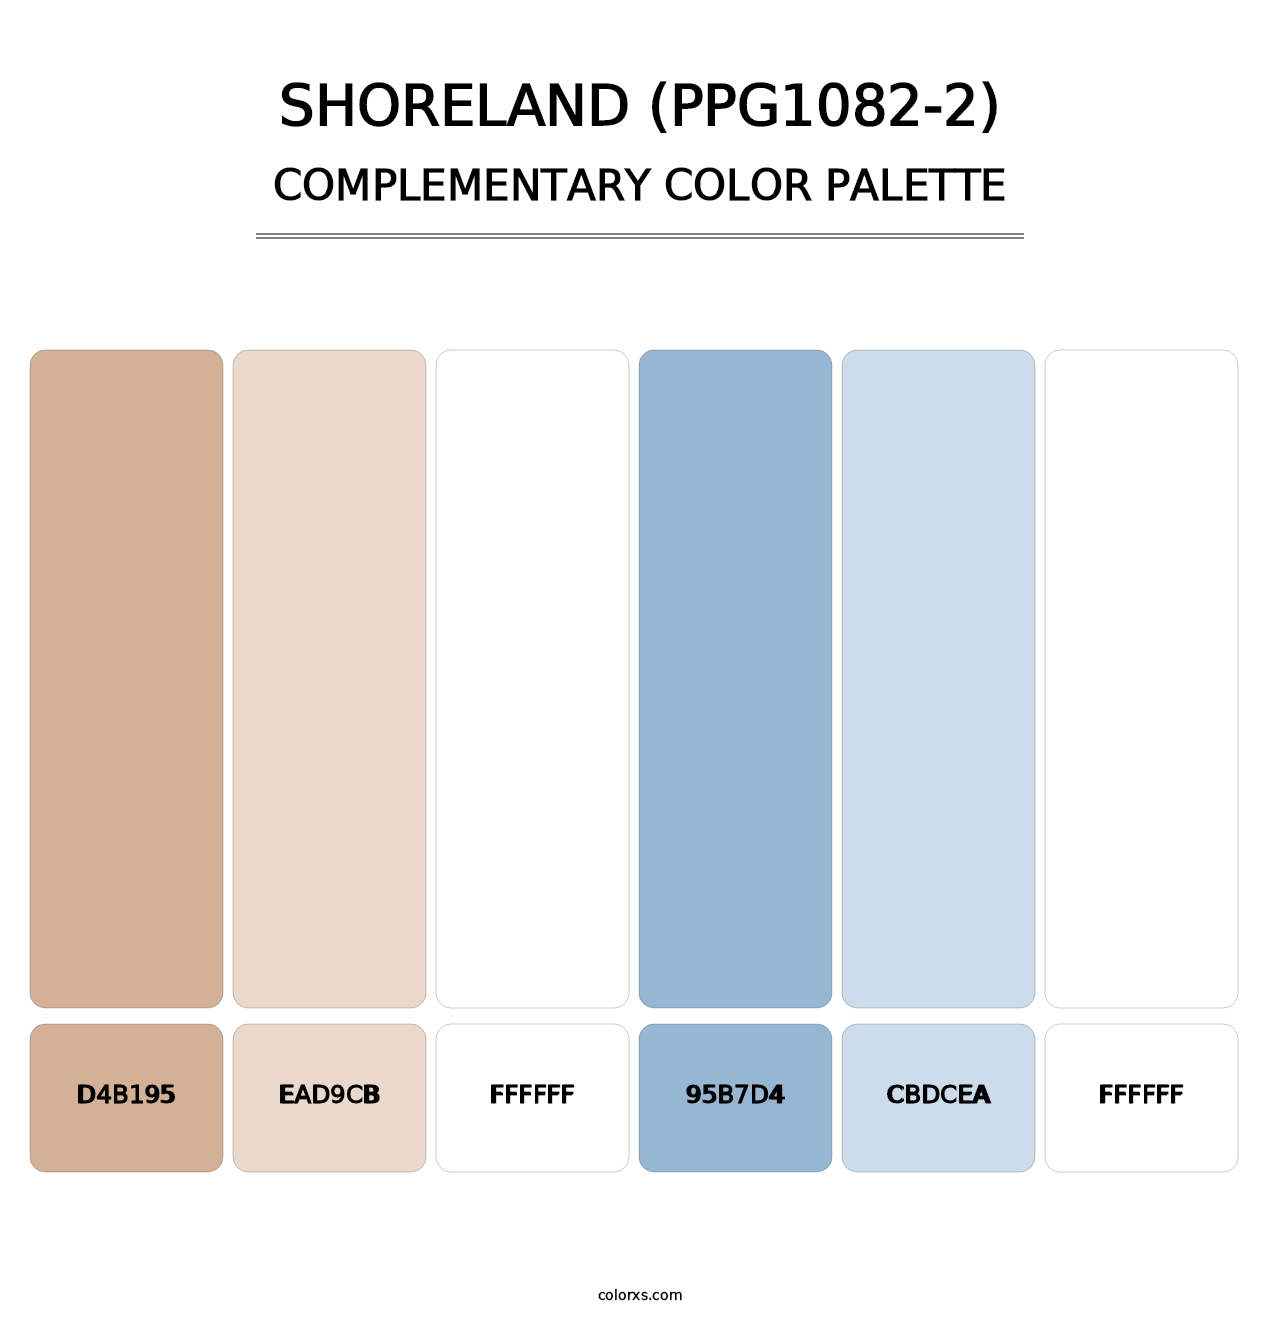 Shoreland (PPG1082-2) - Complementary Color Palette